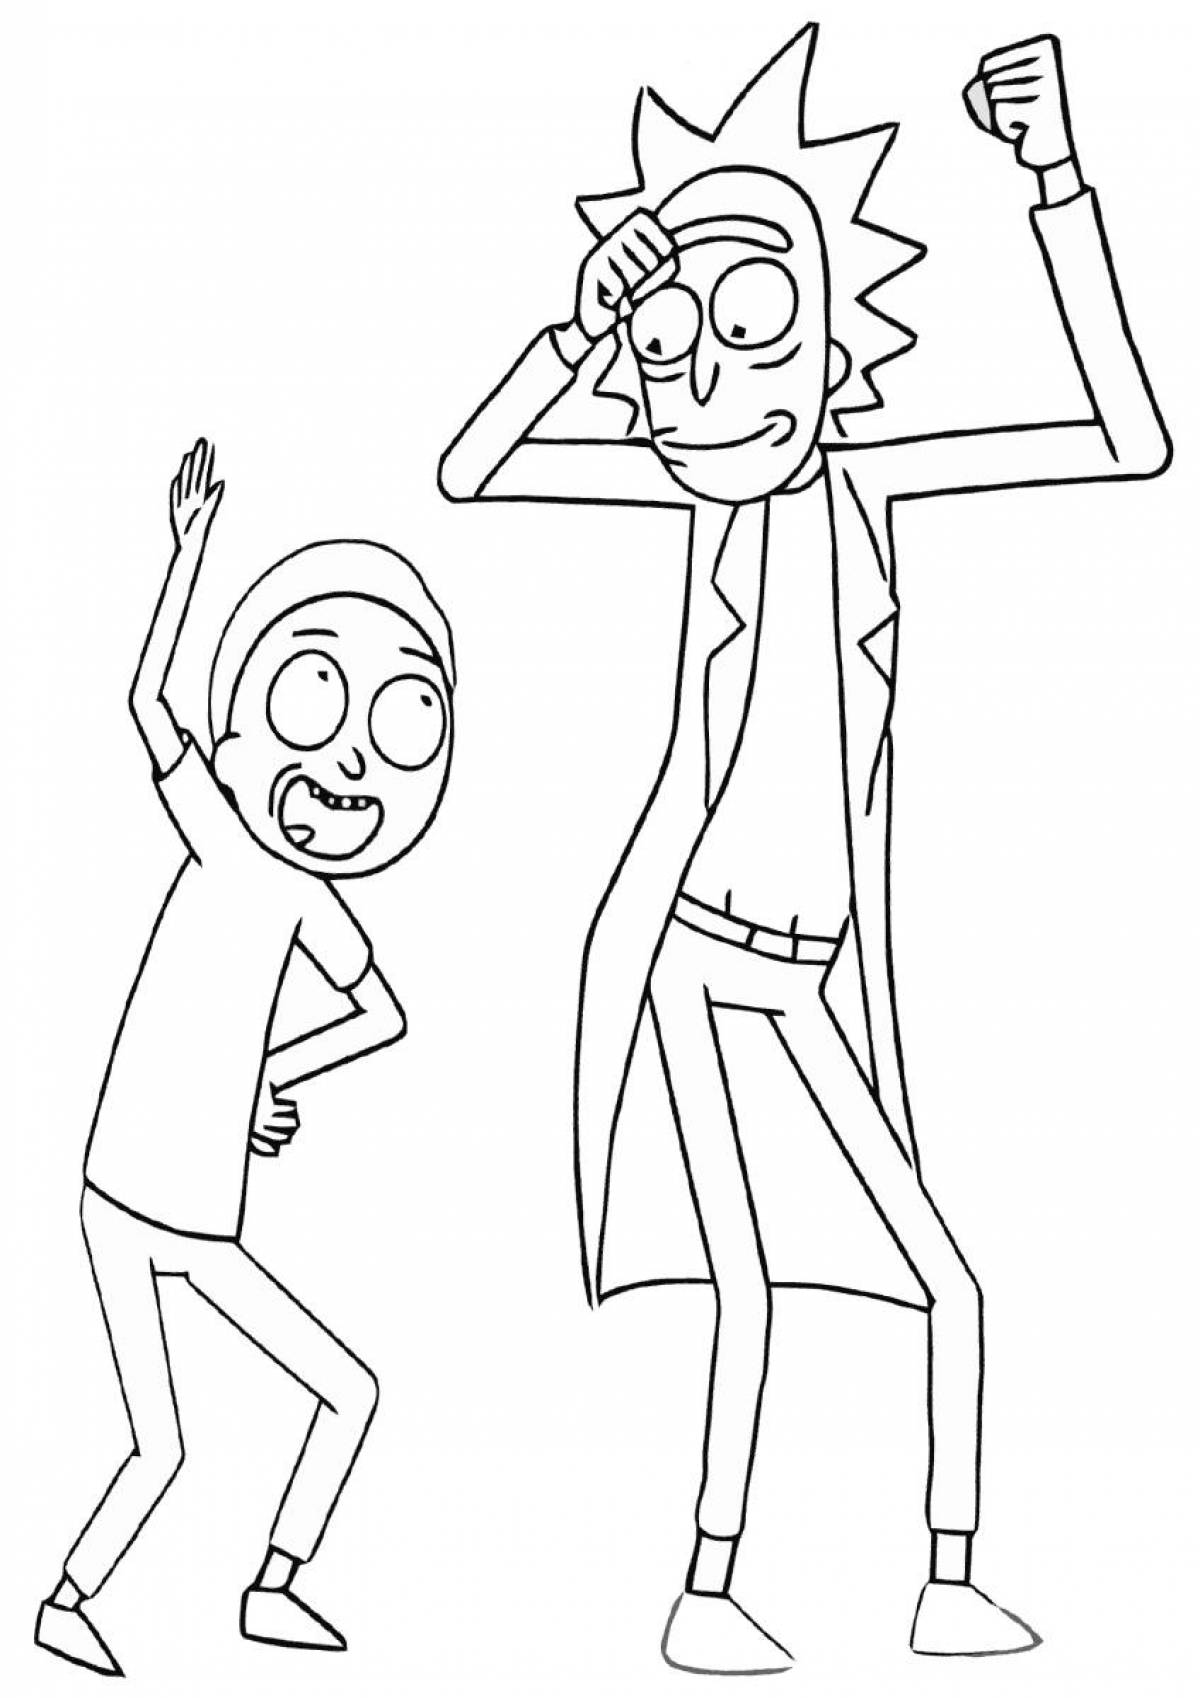 Rick and Morty dancing